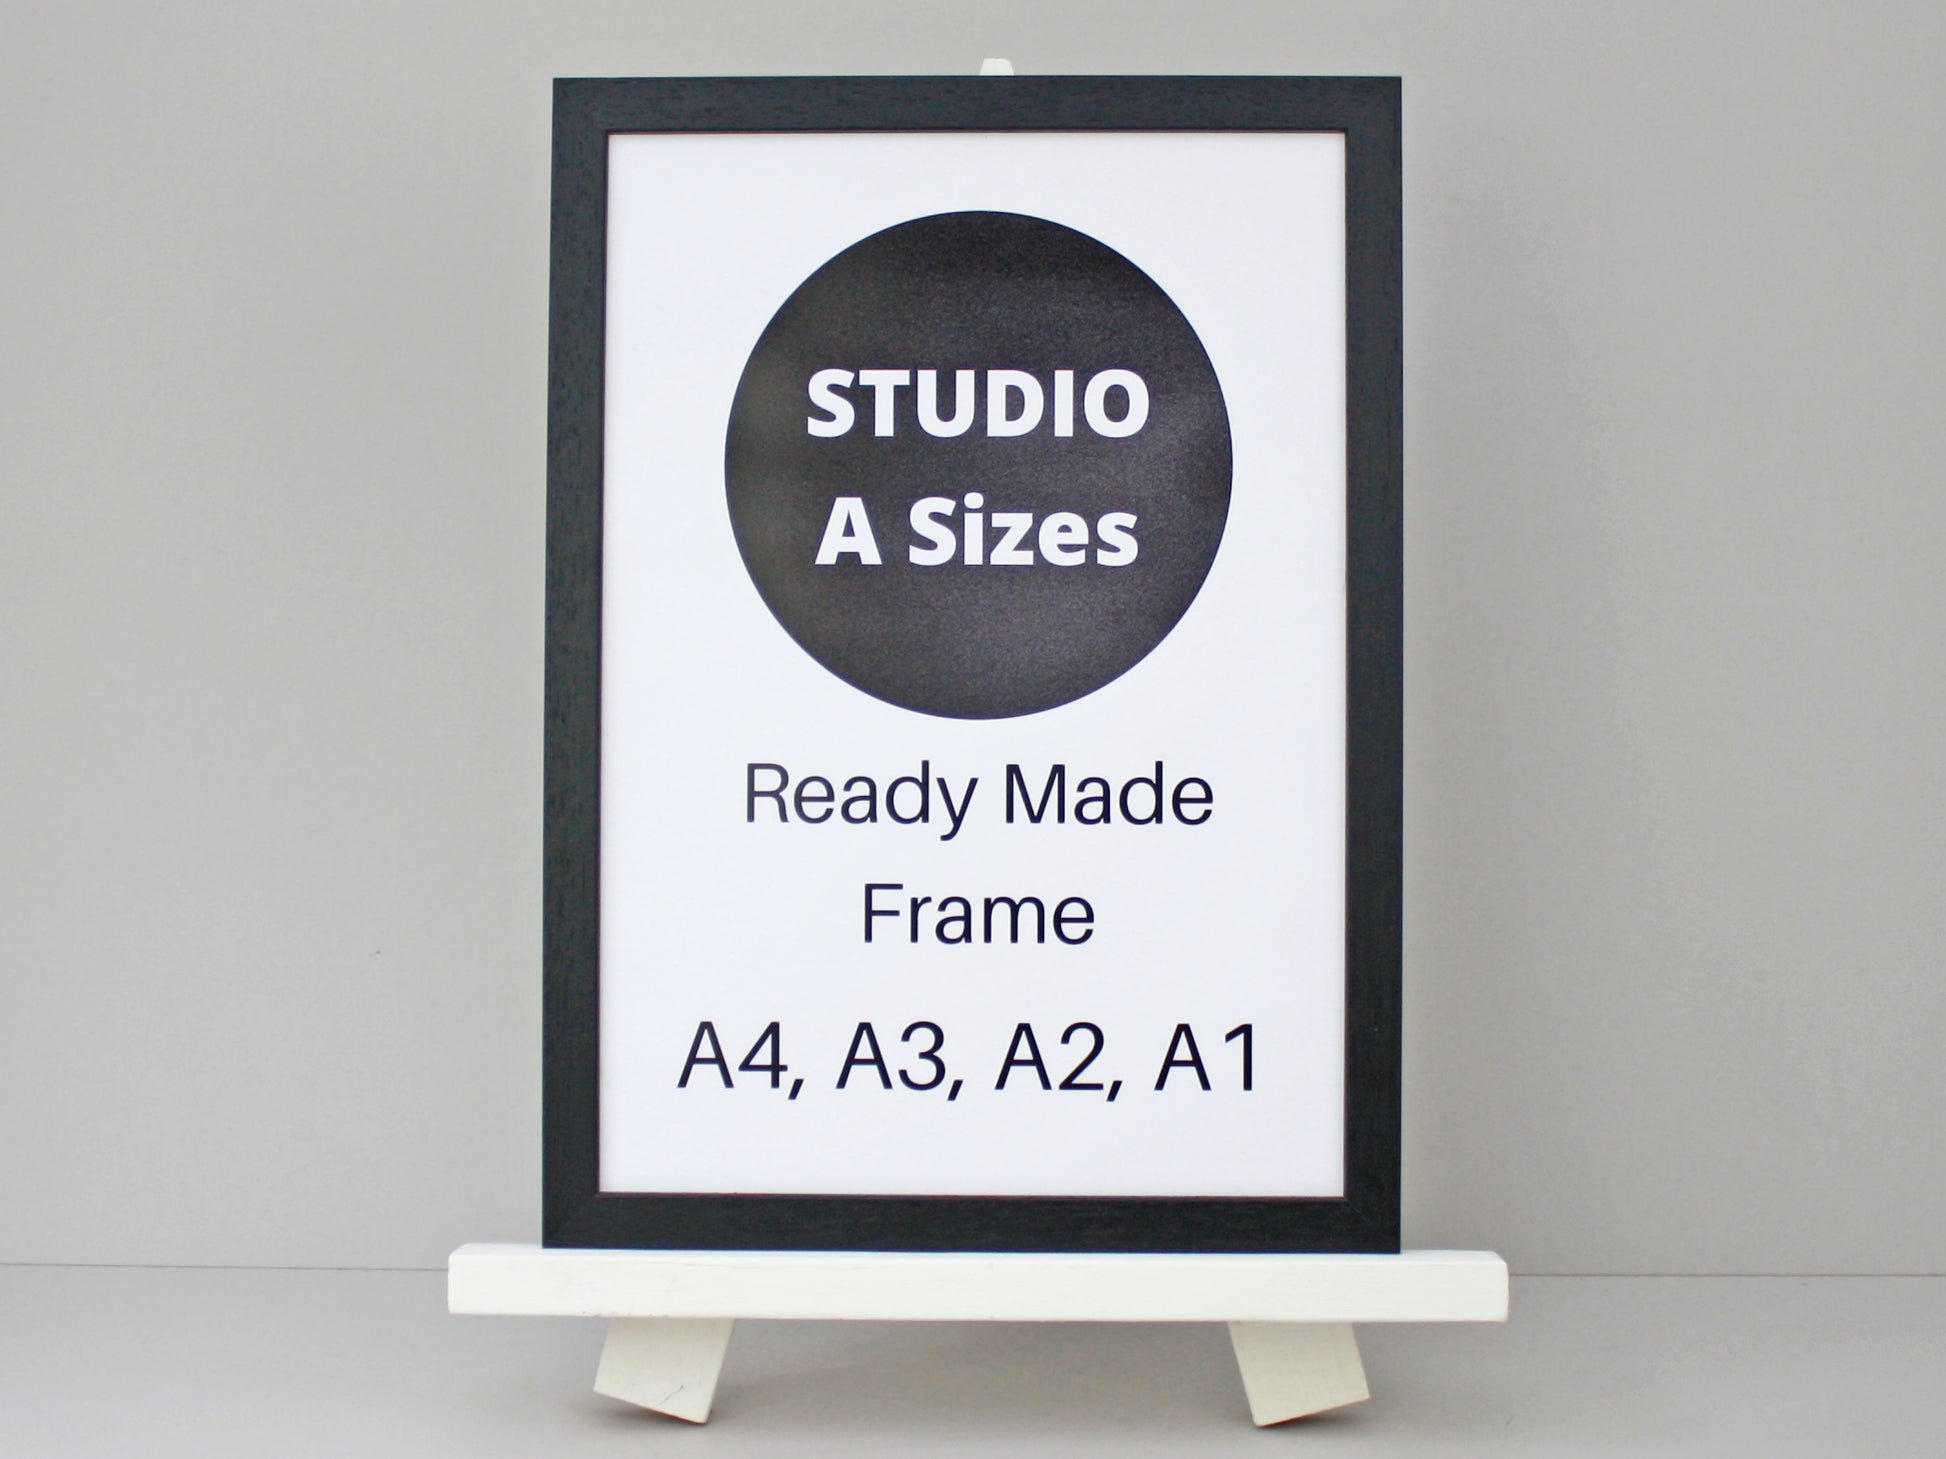 Gallery Wall Set - 5 Pcs Wooden Photo Frames. Studio Range. Various Colours. - PhotoFramesandMore - Wooden Picture Frames